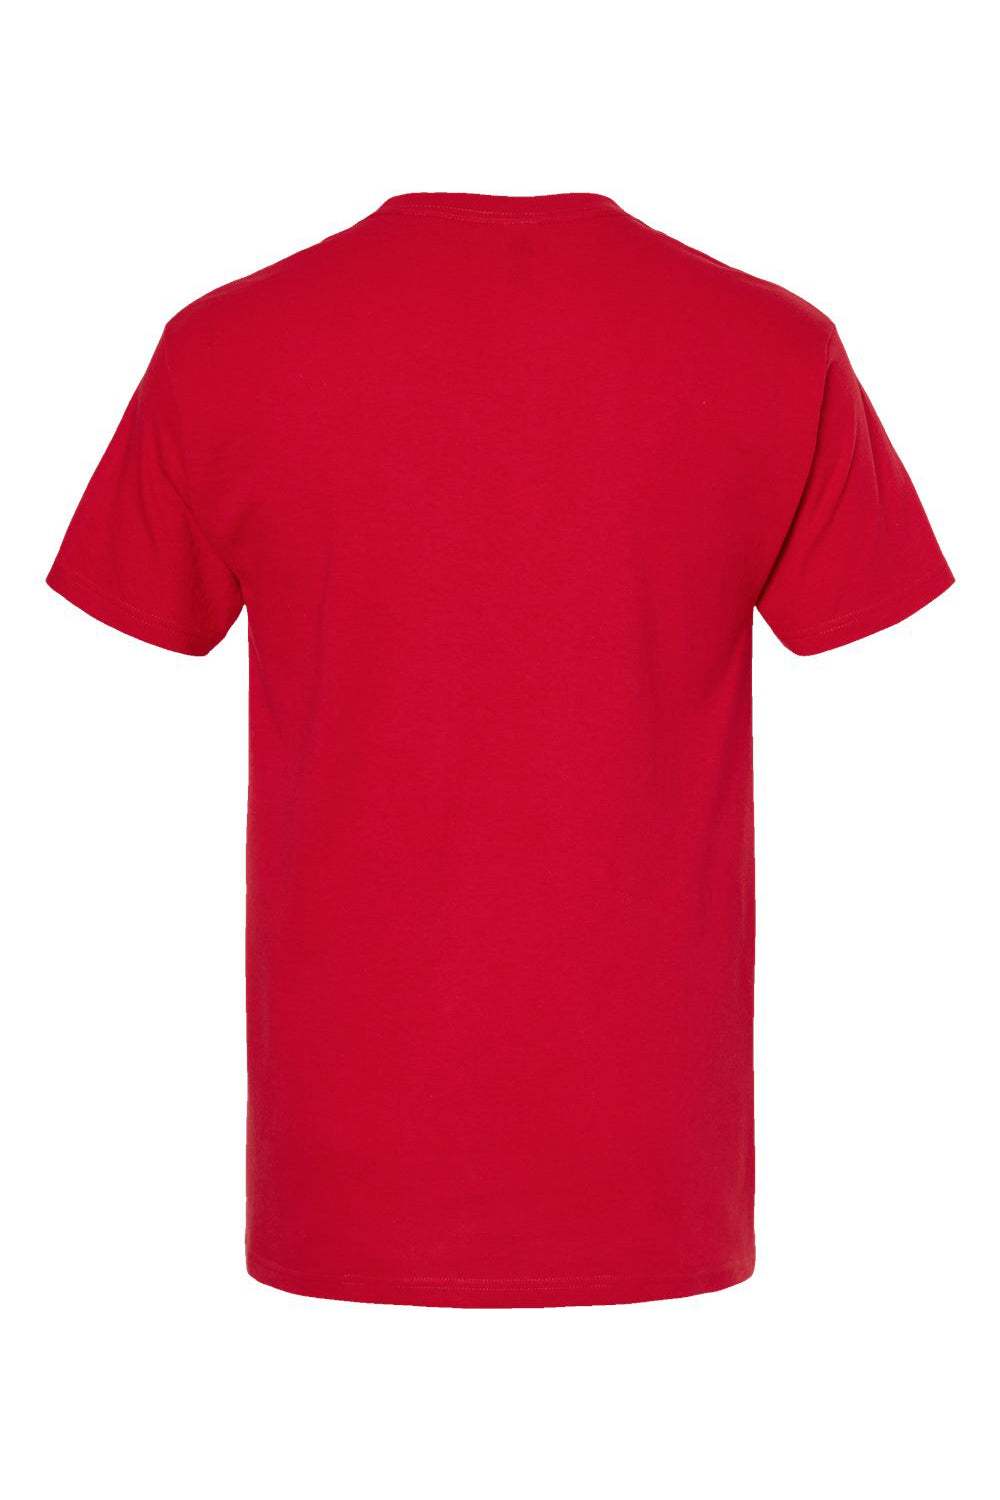 M&O 4800 Mens Gold Soft Touch Short Sleeve Crewneck T-Shirt Deep Red Flat Back